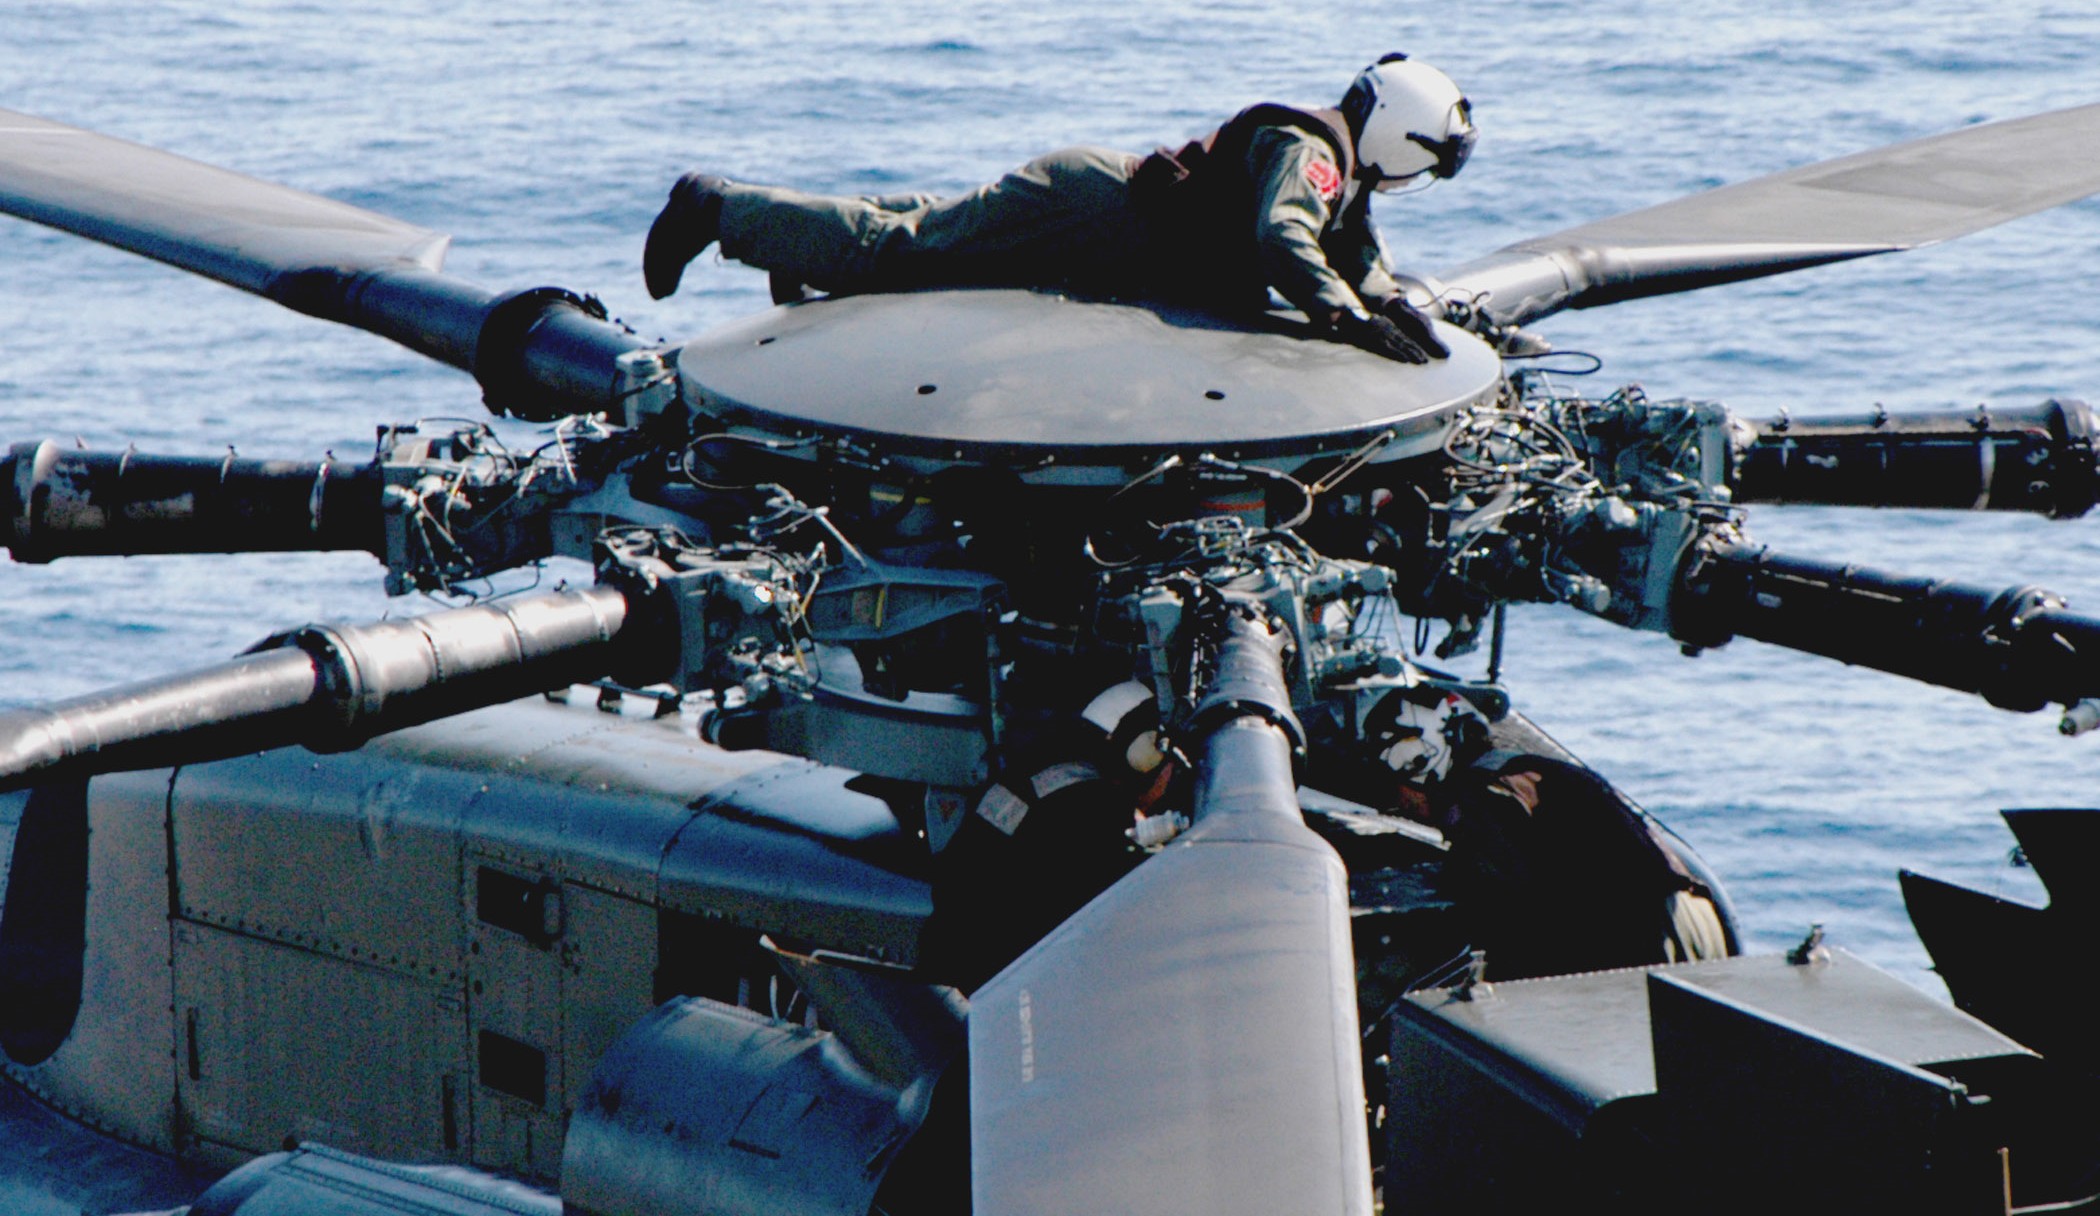 hm-14 vanguard helicopter mine countermeasures squadron navy mh-53e sea dragon 32